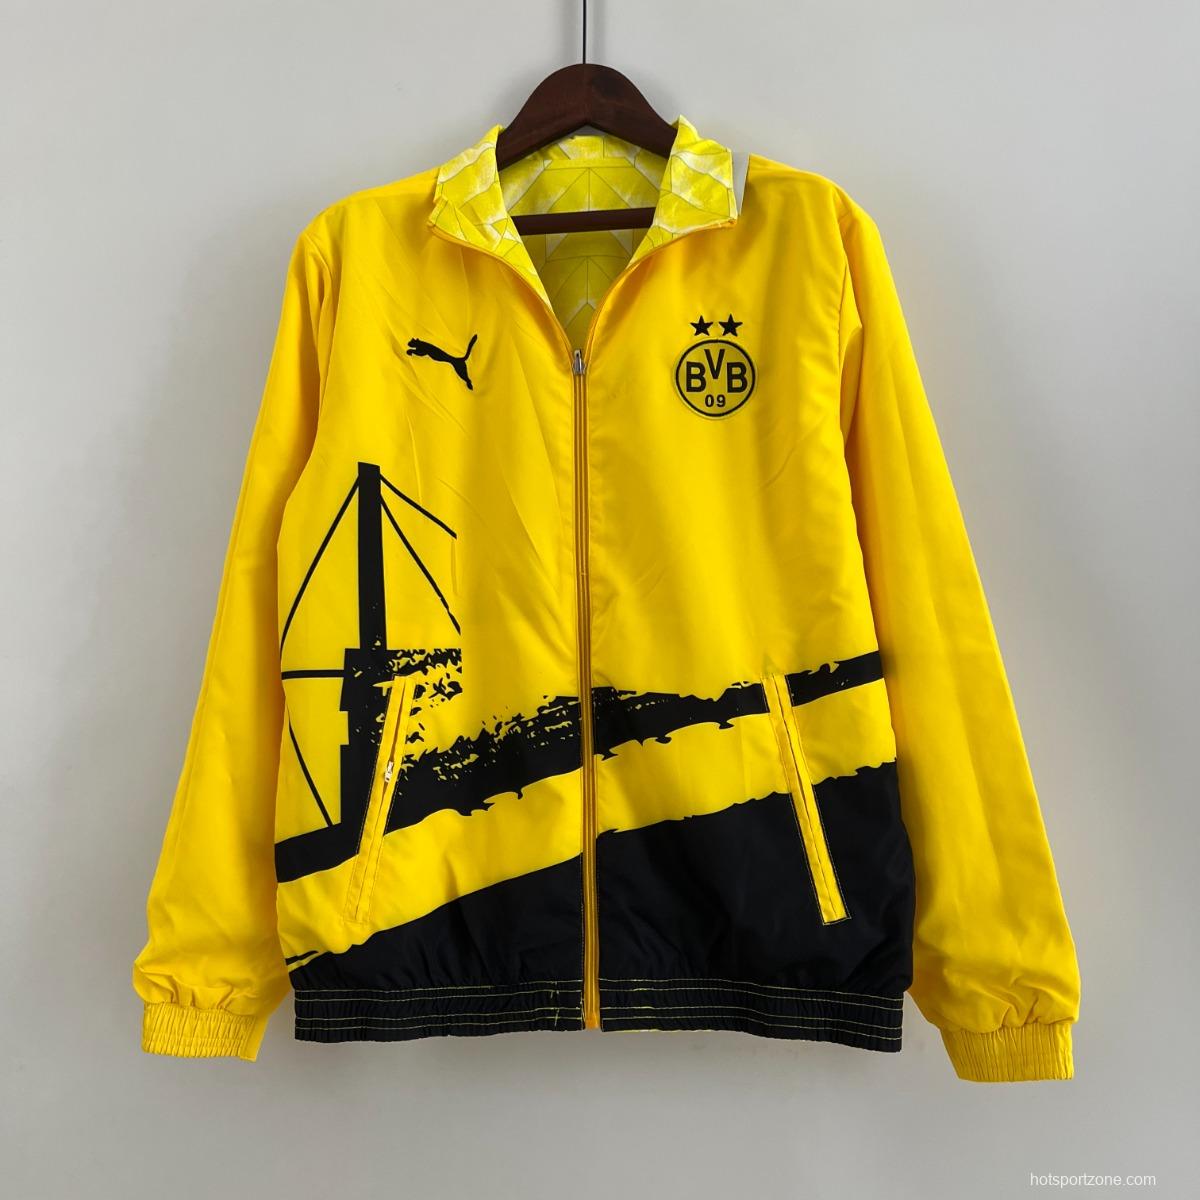 23/24 Borussia Dortmund Yellow Reversible Jersey